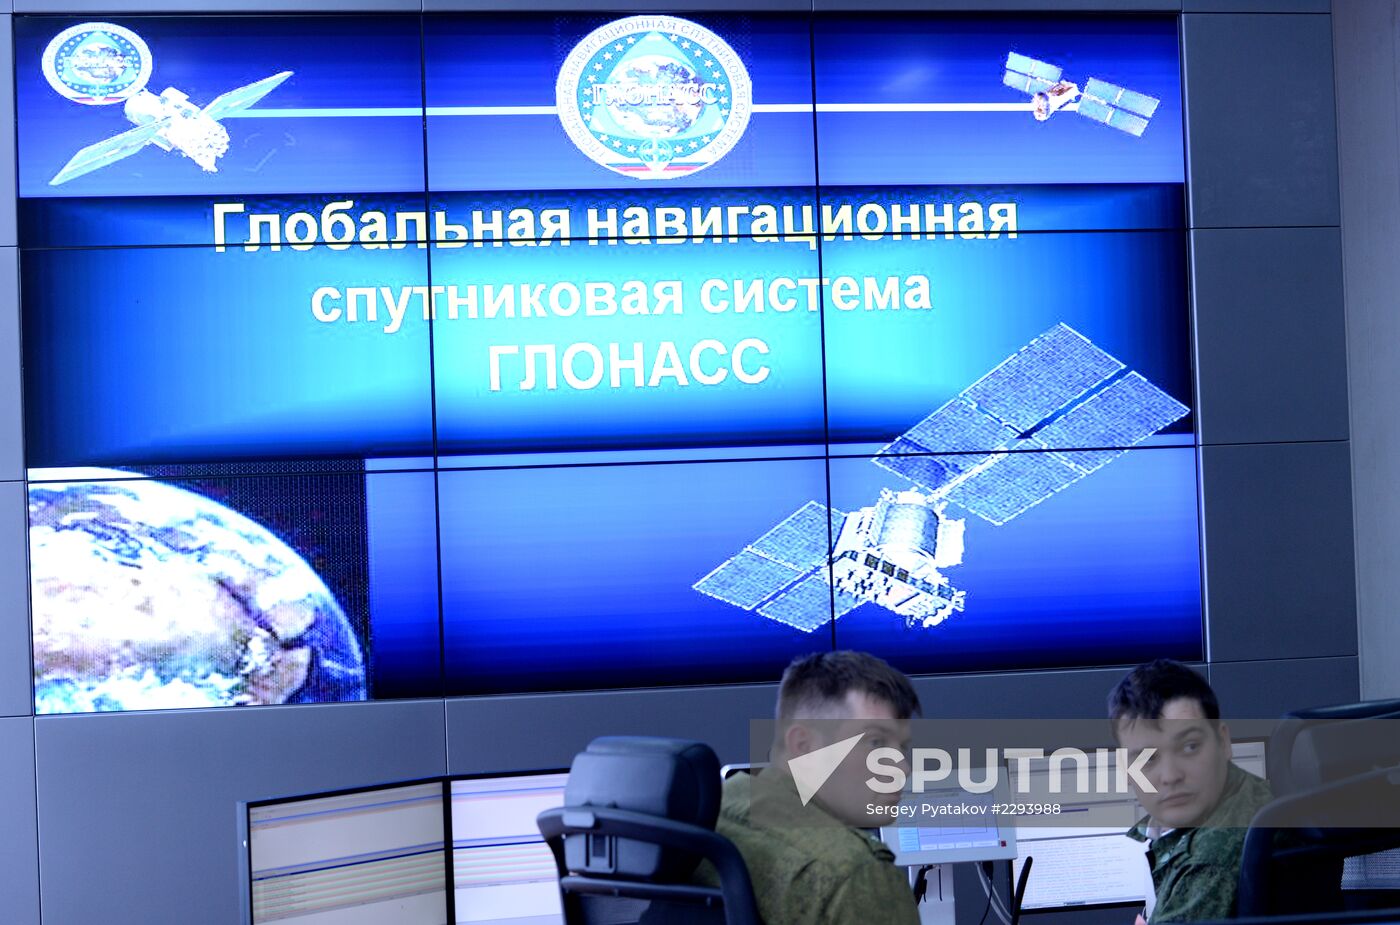 Titov Main Space Testing Center